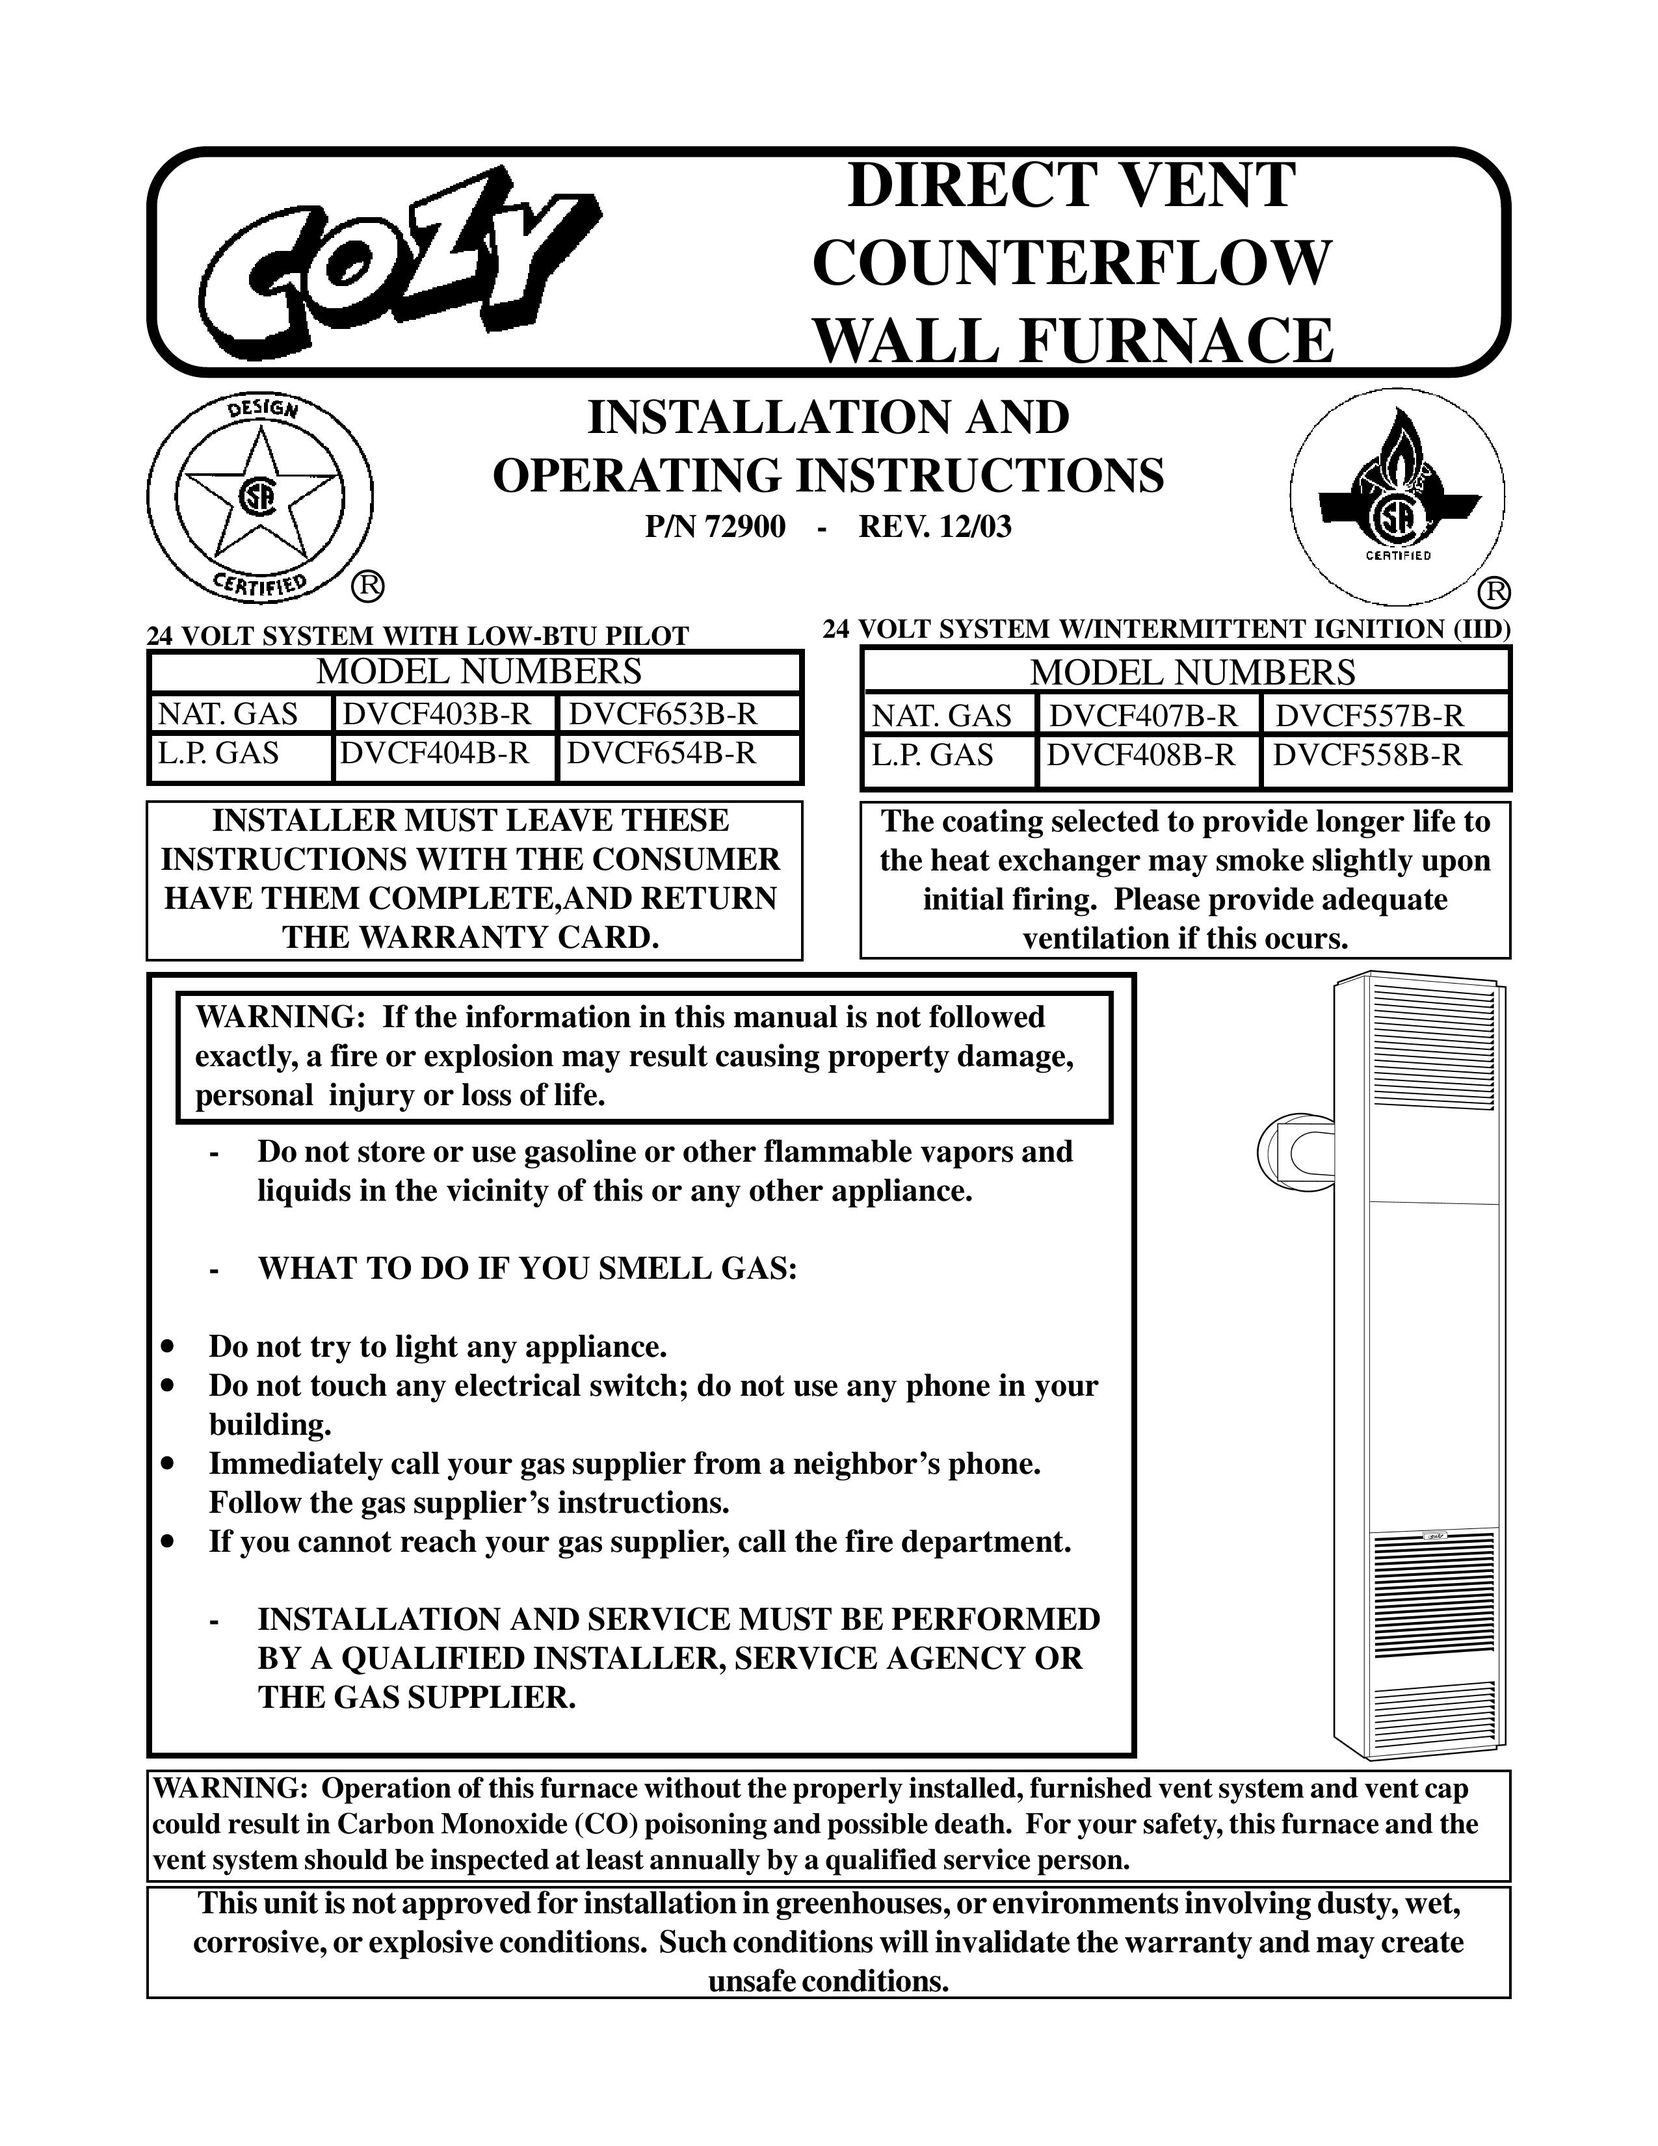 Louisville Tin and Stove DVCF558B-R Furnace User Manual